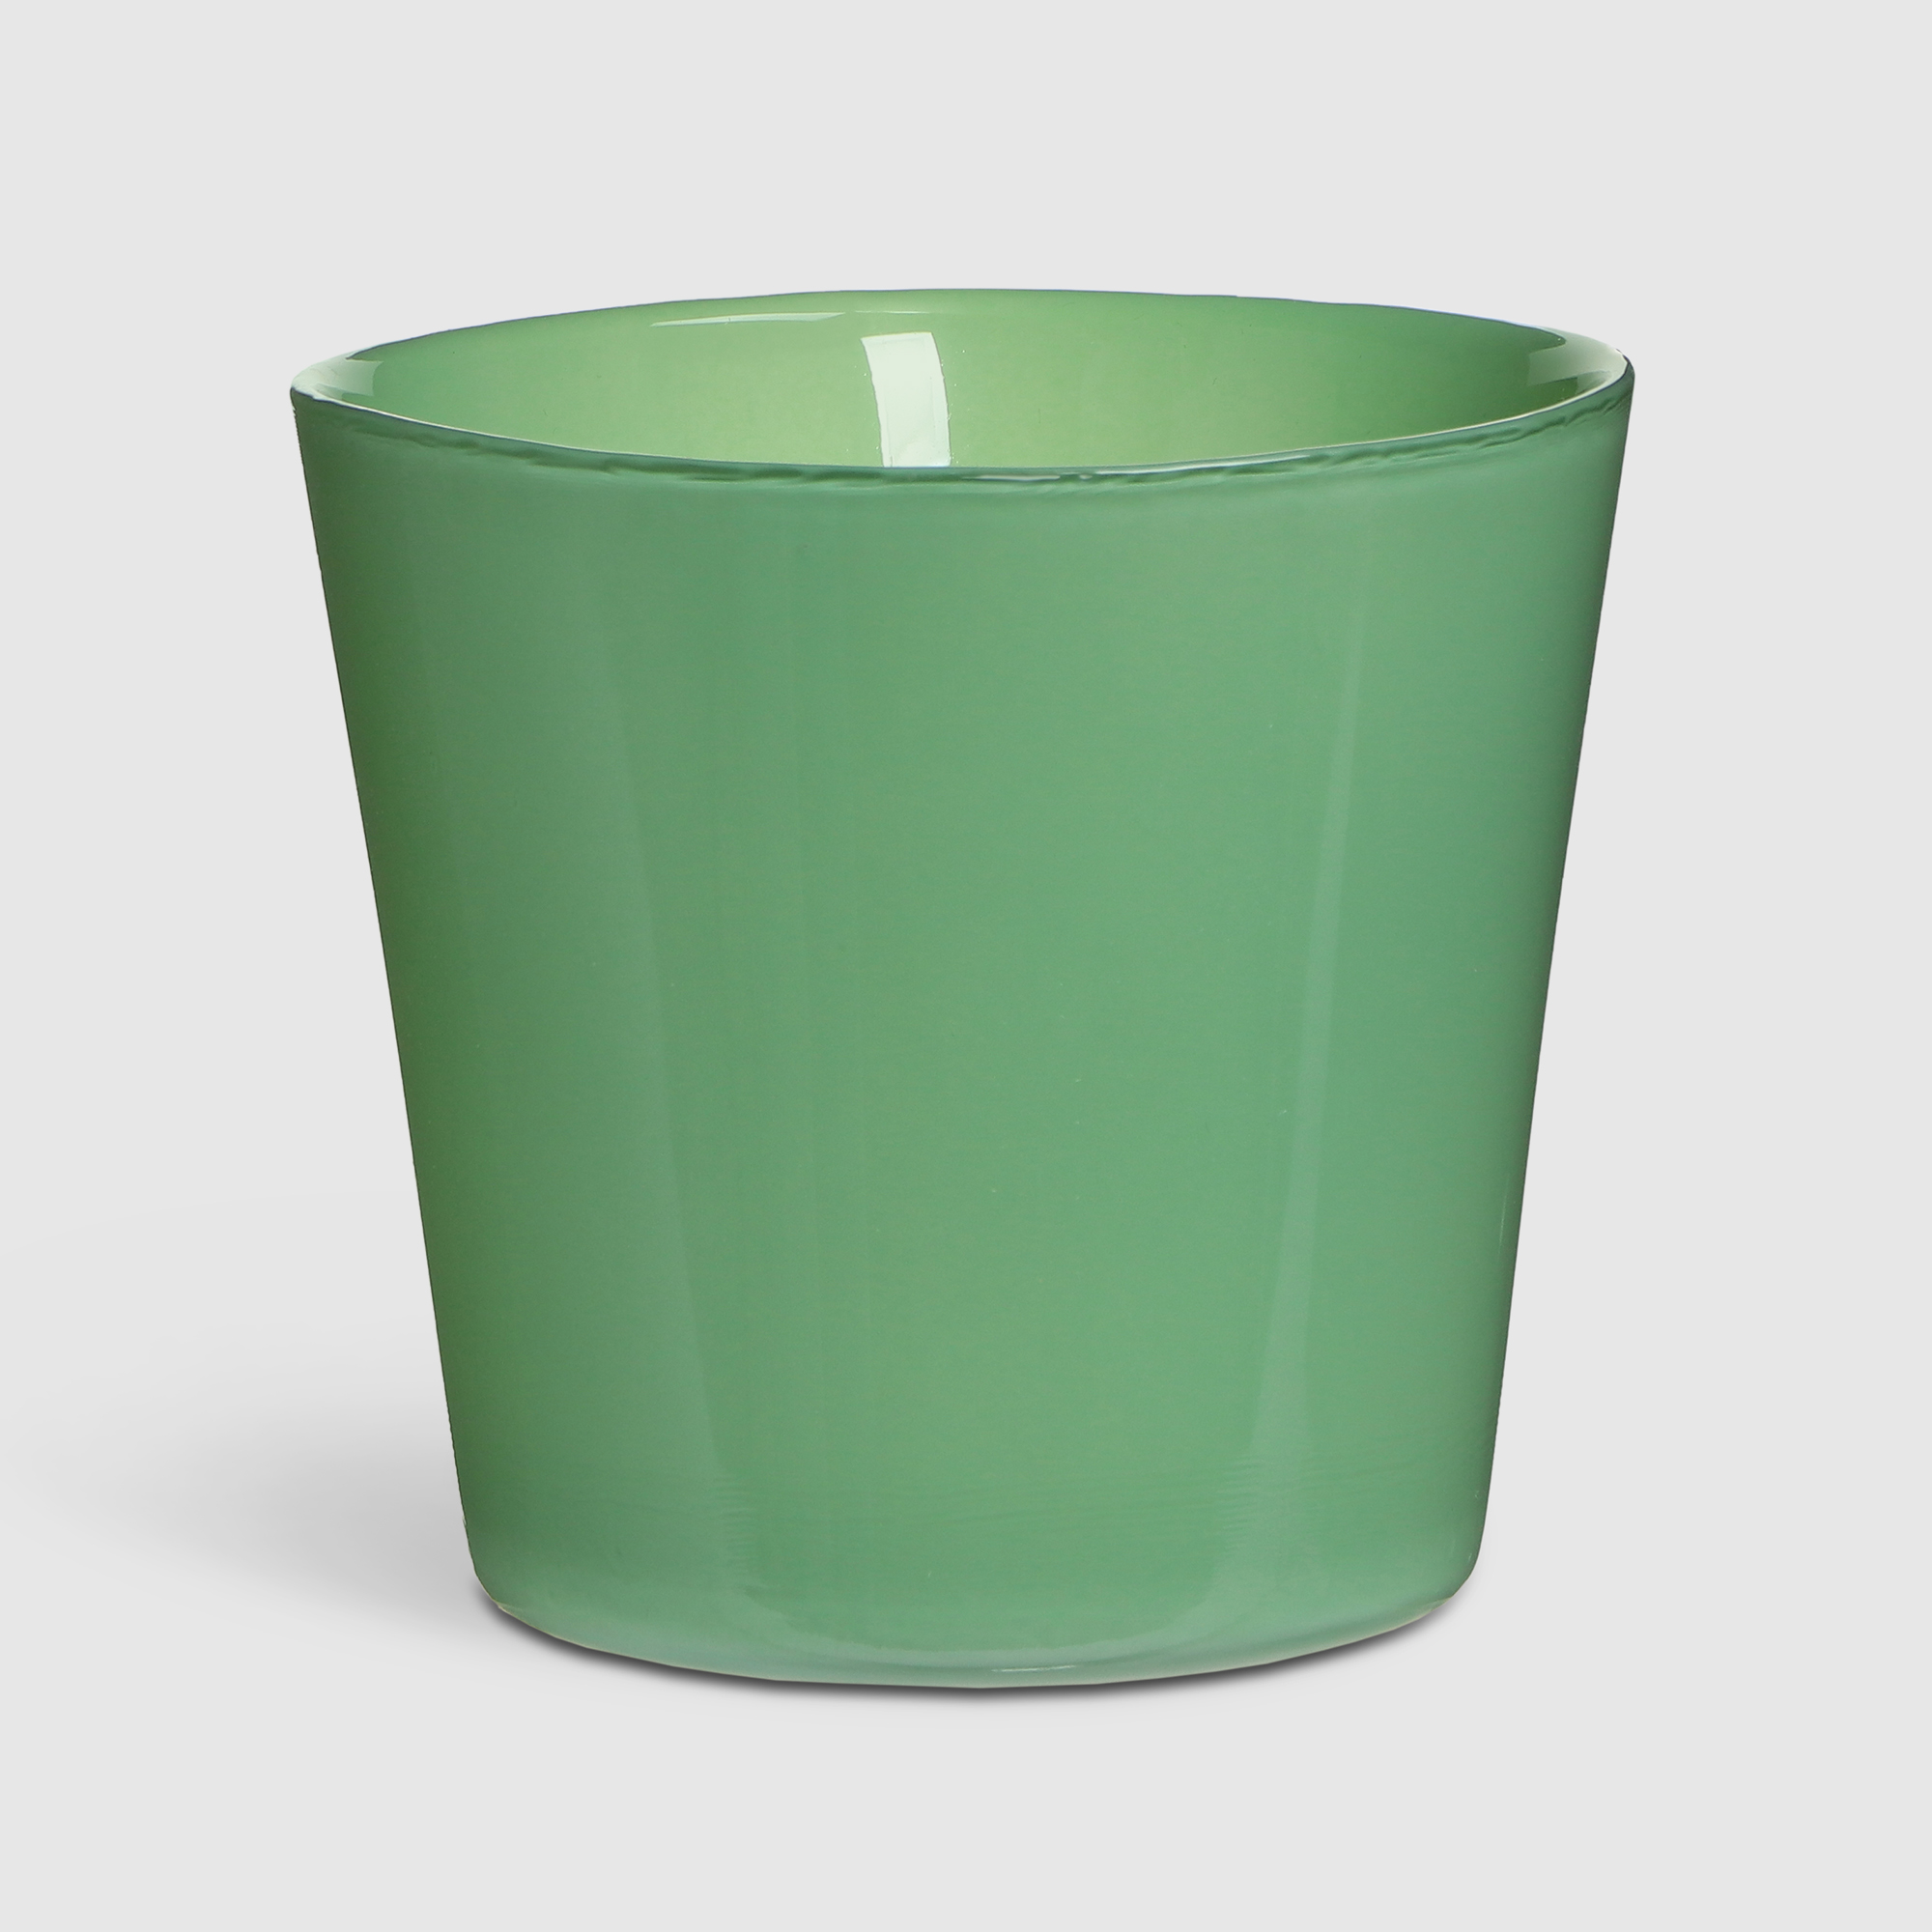 Ваза Hakbijl glass Conny 13,5х12,5 см зелёная